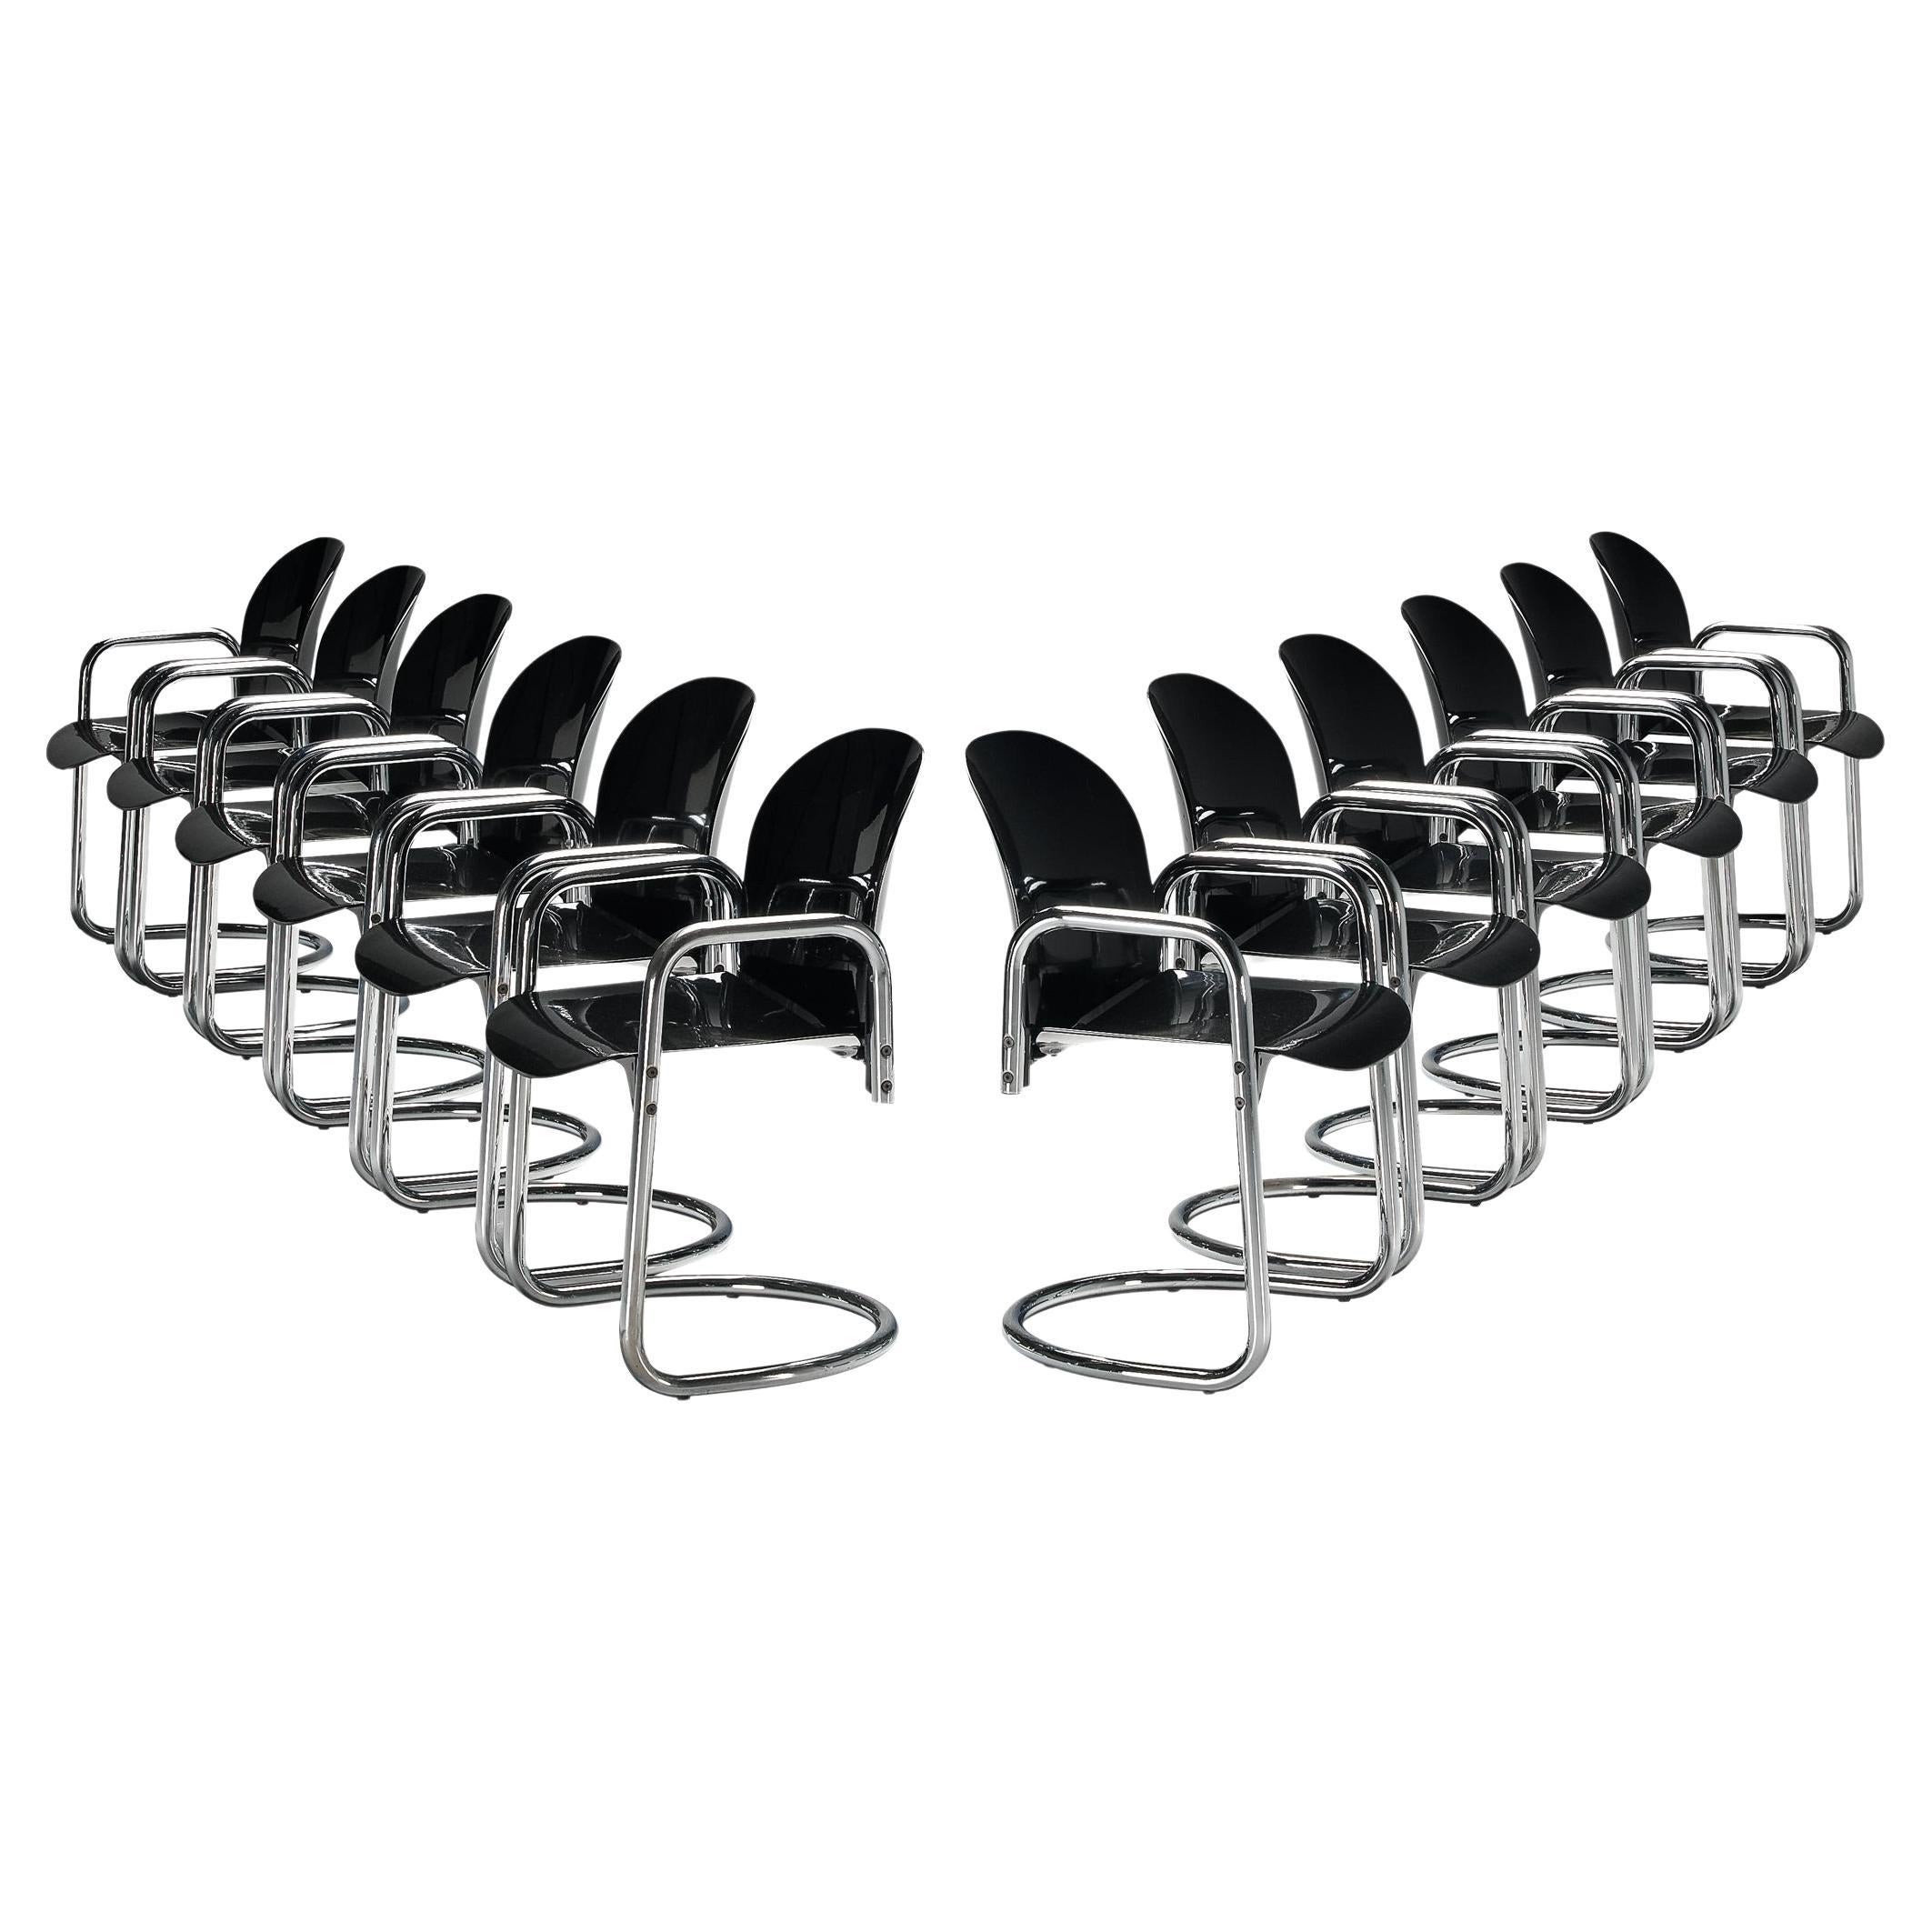 Afra & Tobia Scarpa for B&B Italia 'Dialogo Dessau' Dining Chairs  For Sale